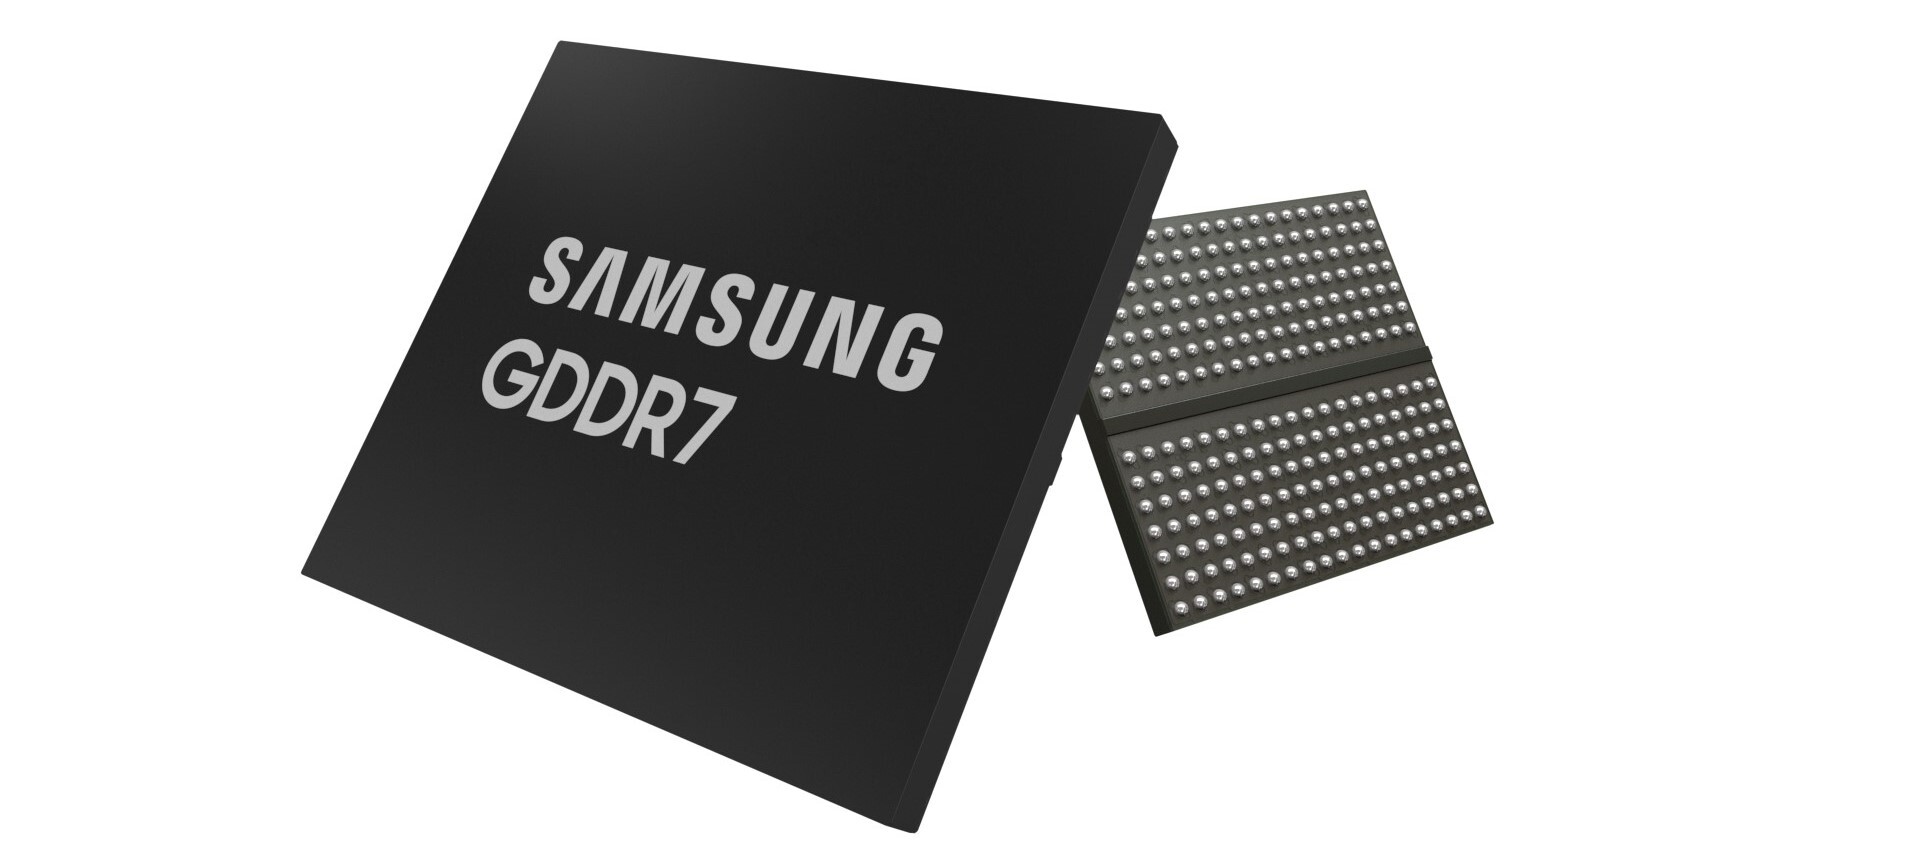 Samsung Unleashes World's First GDDR7 Memory For Next-Gen GPUs